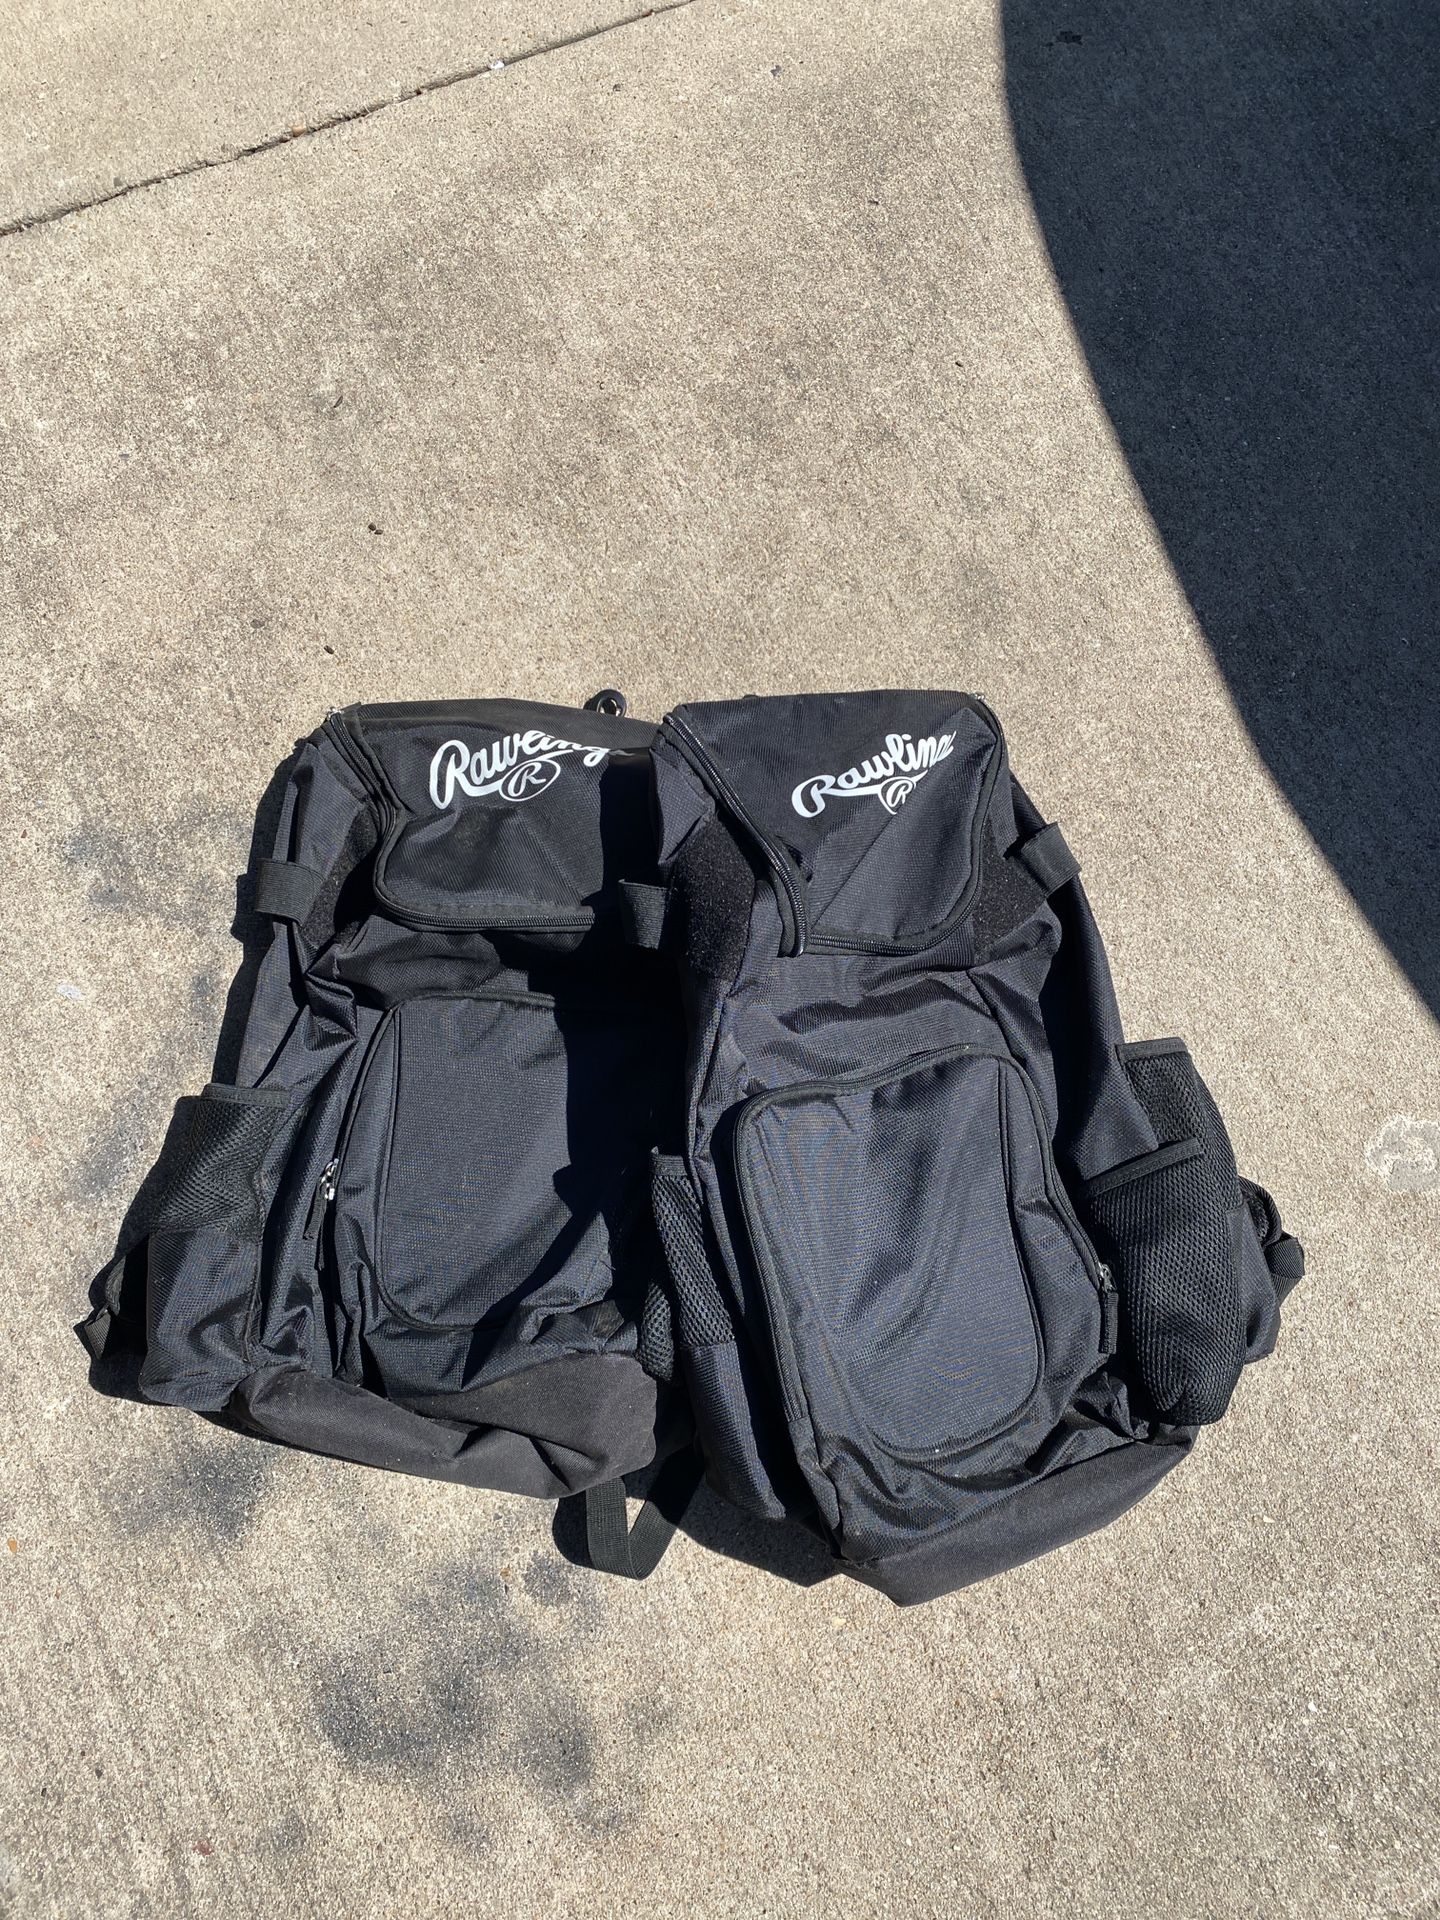 2 Rawlings Baseball Backpacks